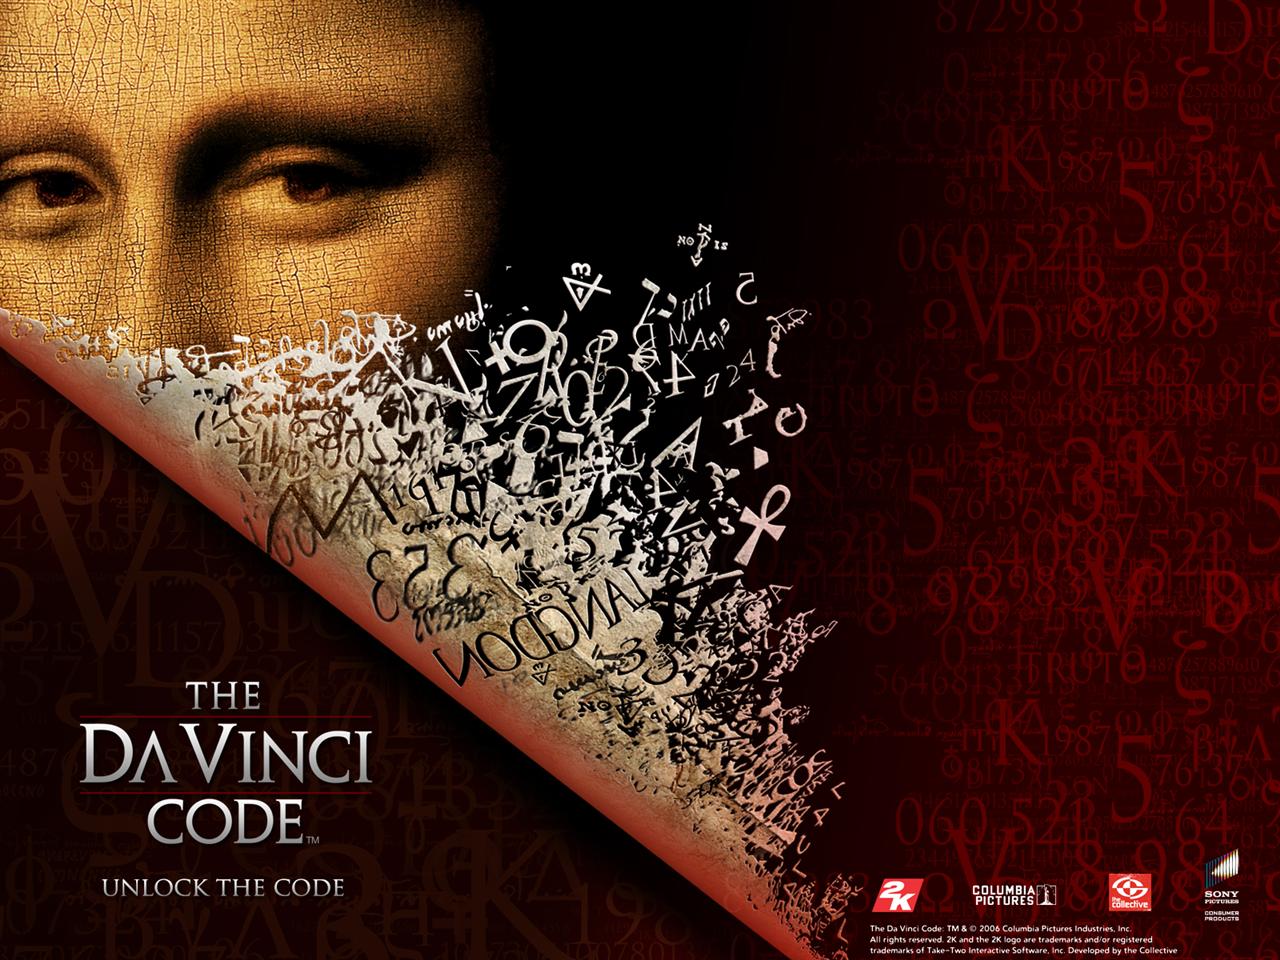 Da Vinci Code Wallpaper. Awesome Zelda Wallpaper, Cute Panda Wallpaper and Amazing Zelda Wallpaper